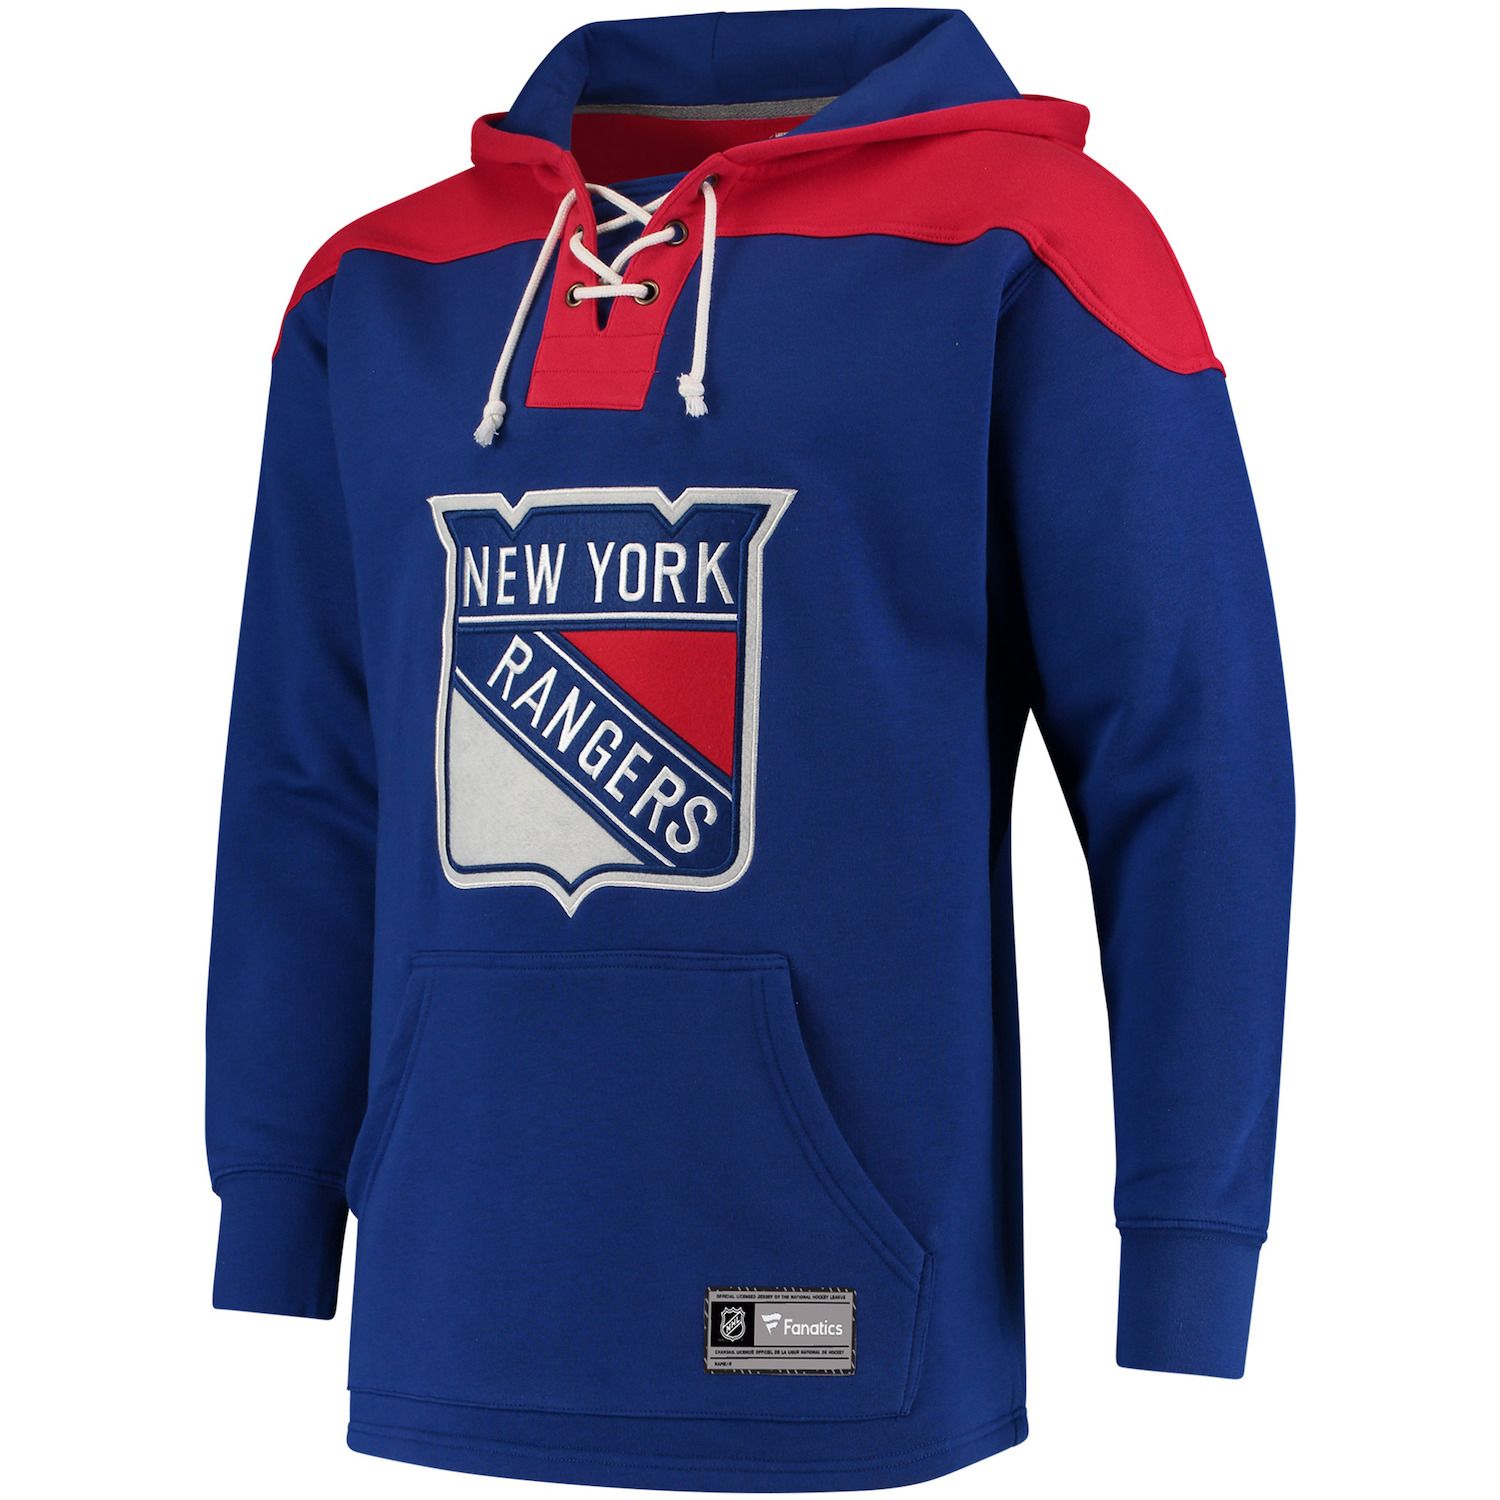 Men's New York Rangers Lace Up Hoodie